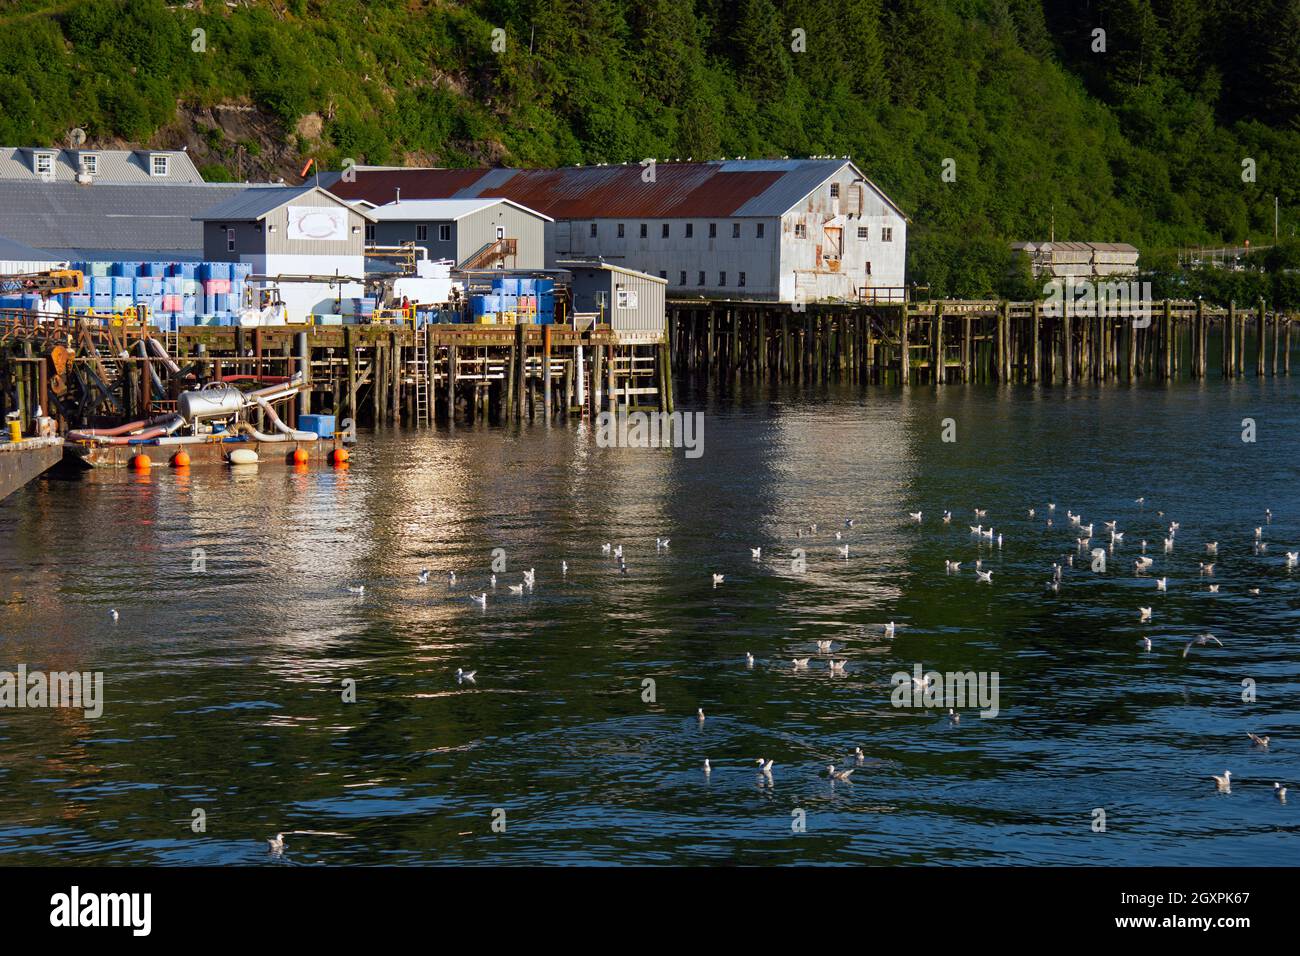 Glaucous winged gulls, Larus glaucescens, swim close to the piers at the port of Cordova, Alaska, USA Stock Photo